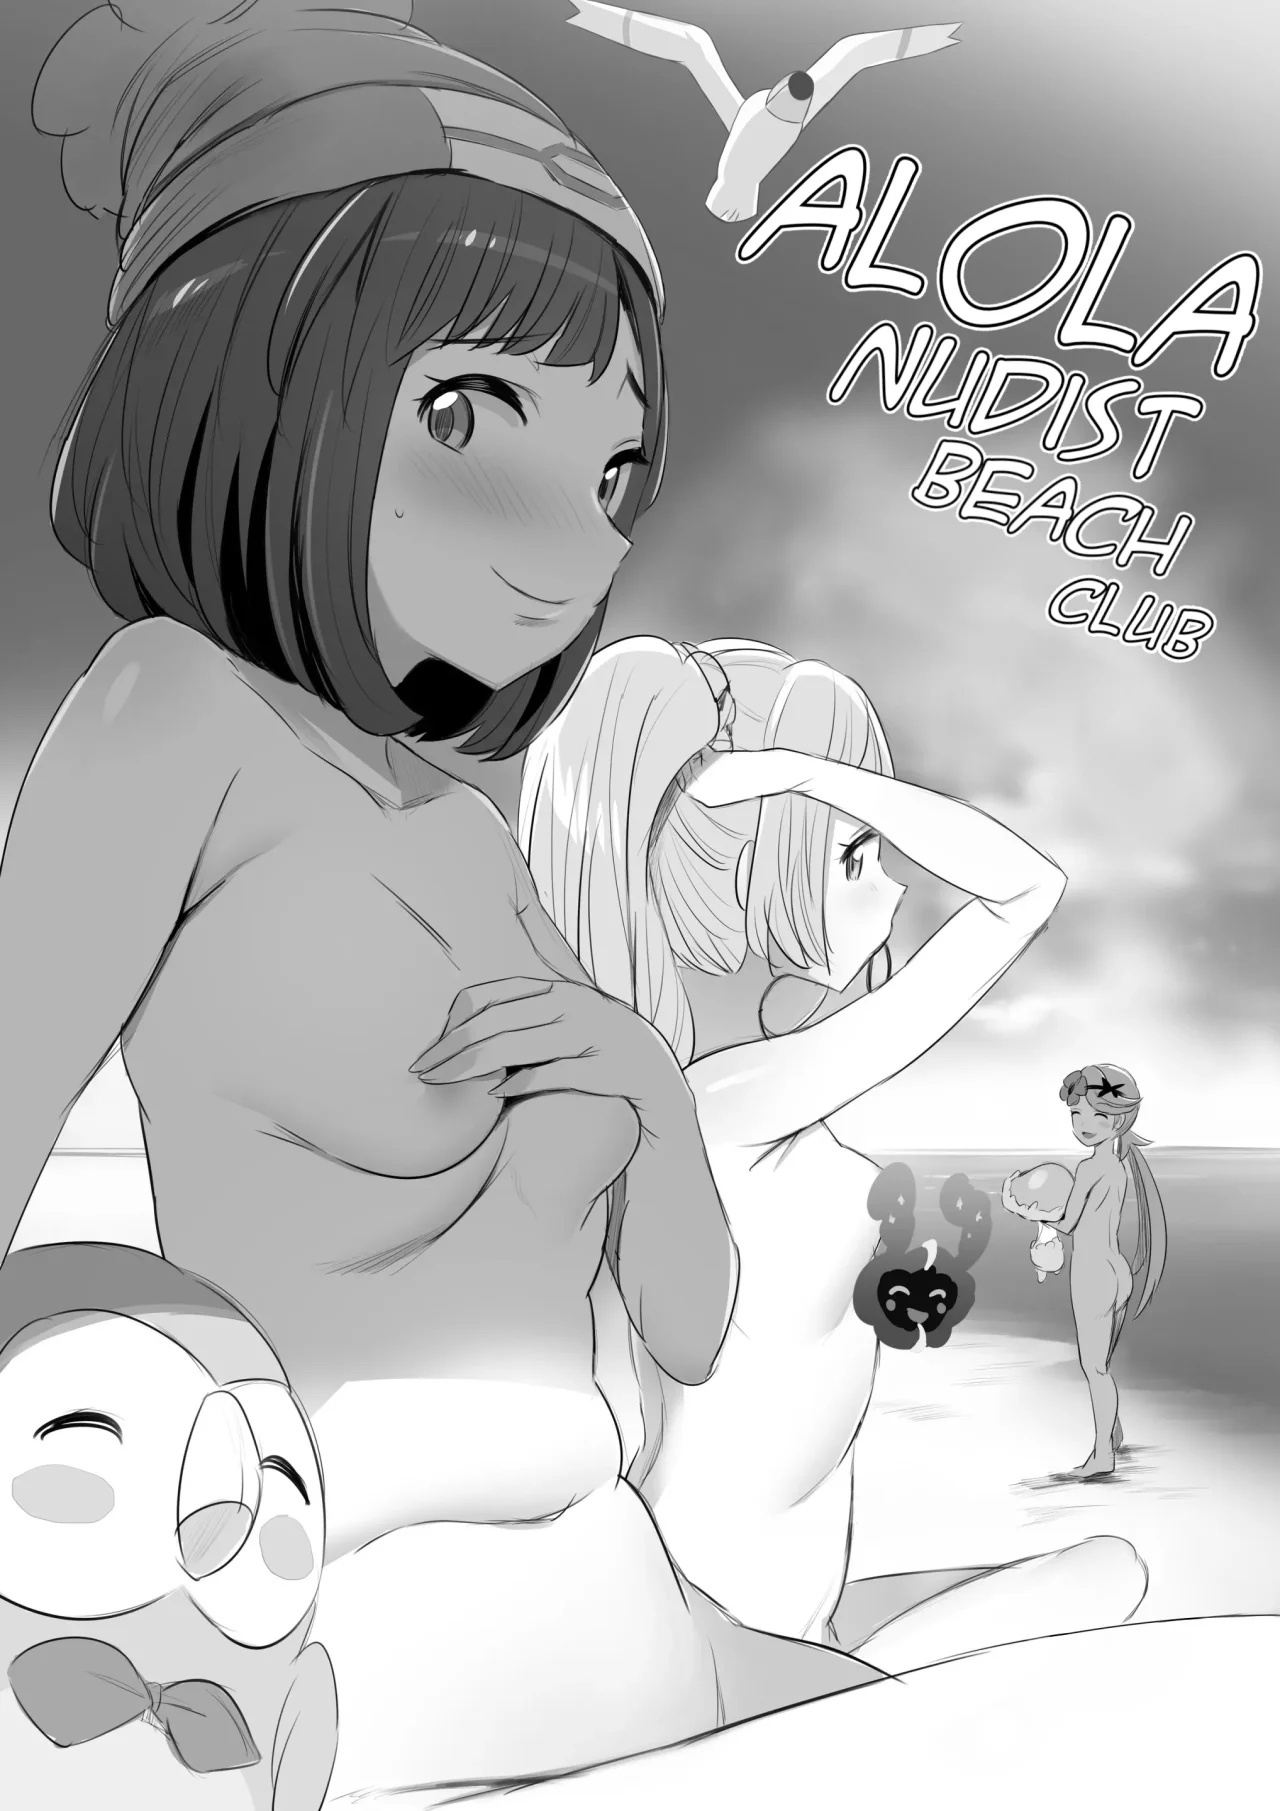 Alola Nudist Beach Club - 0